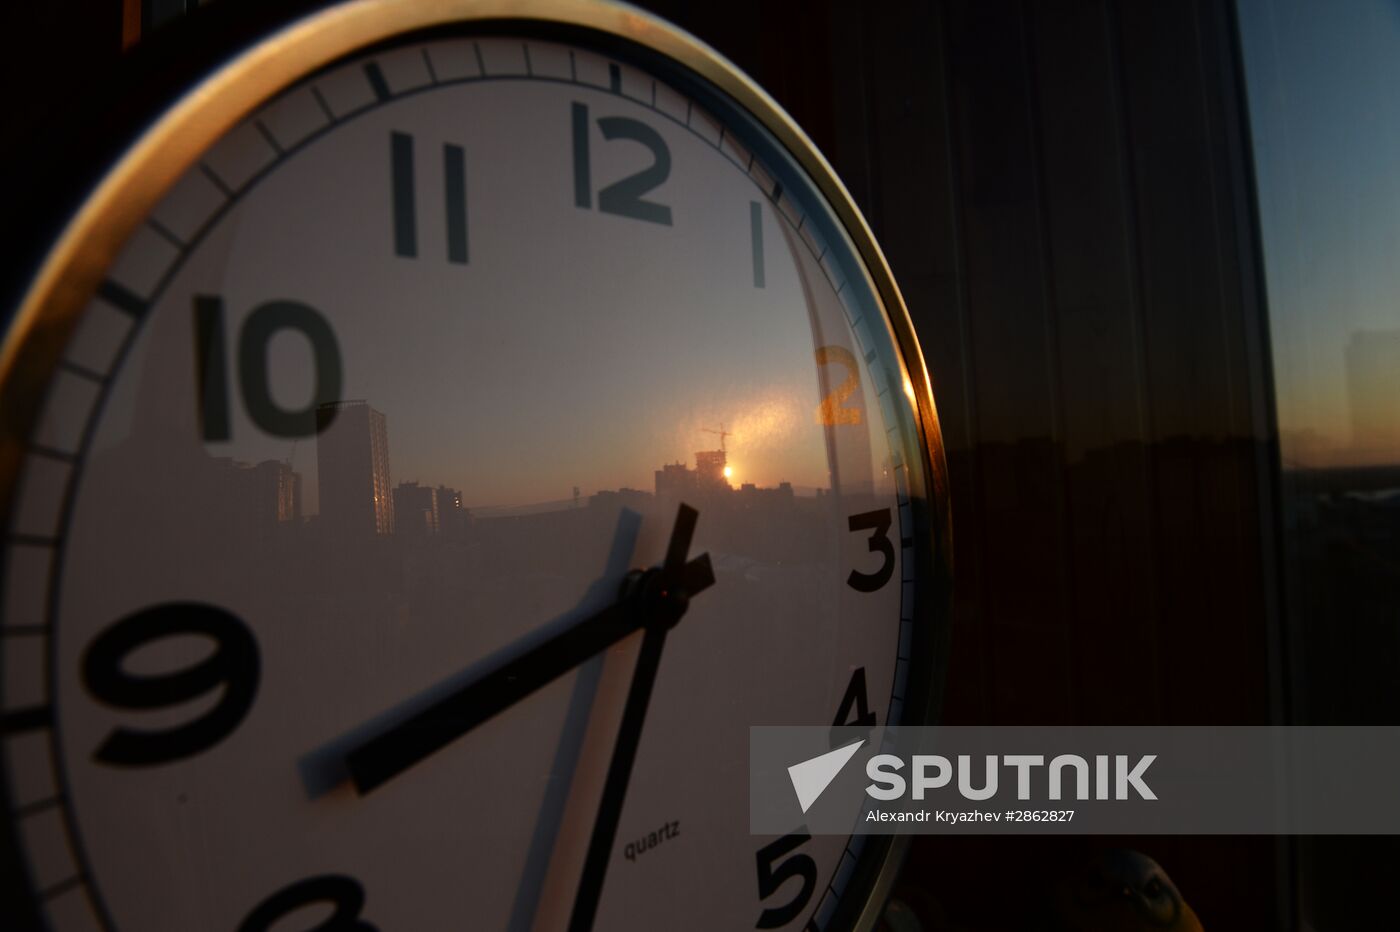 Novosibirsk legislators propose changing the region's time zone into UTC+7